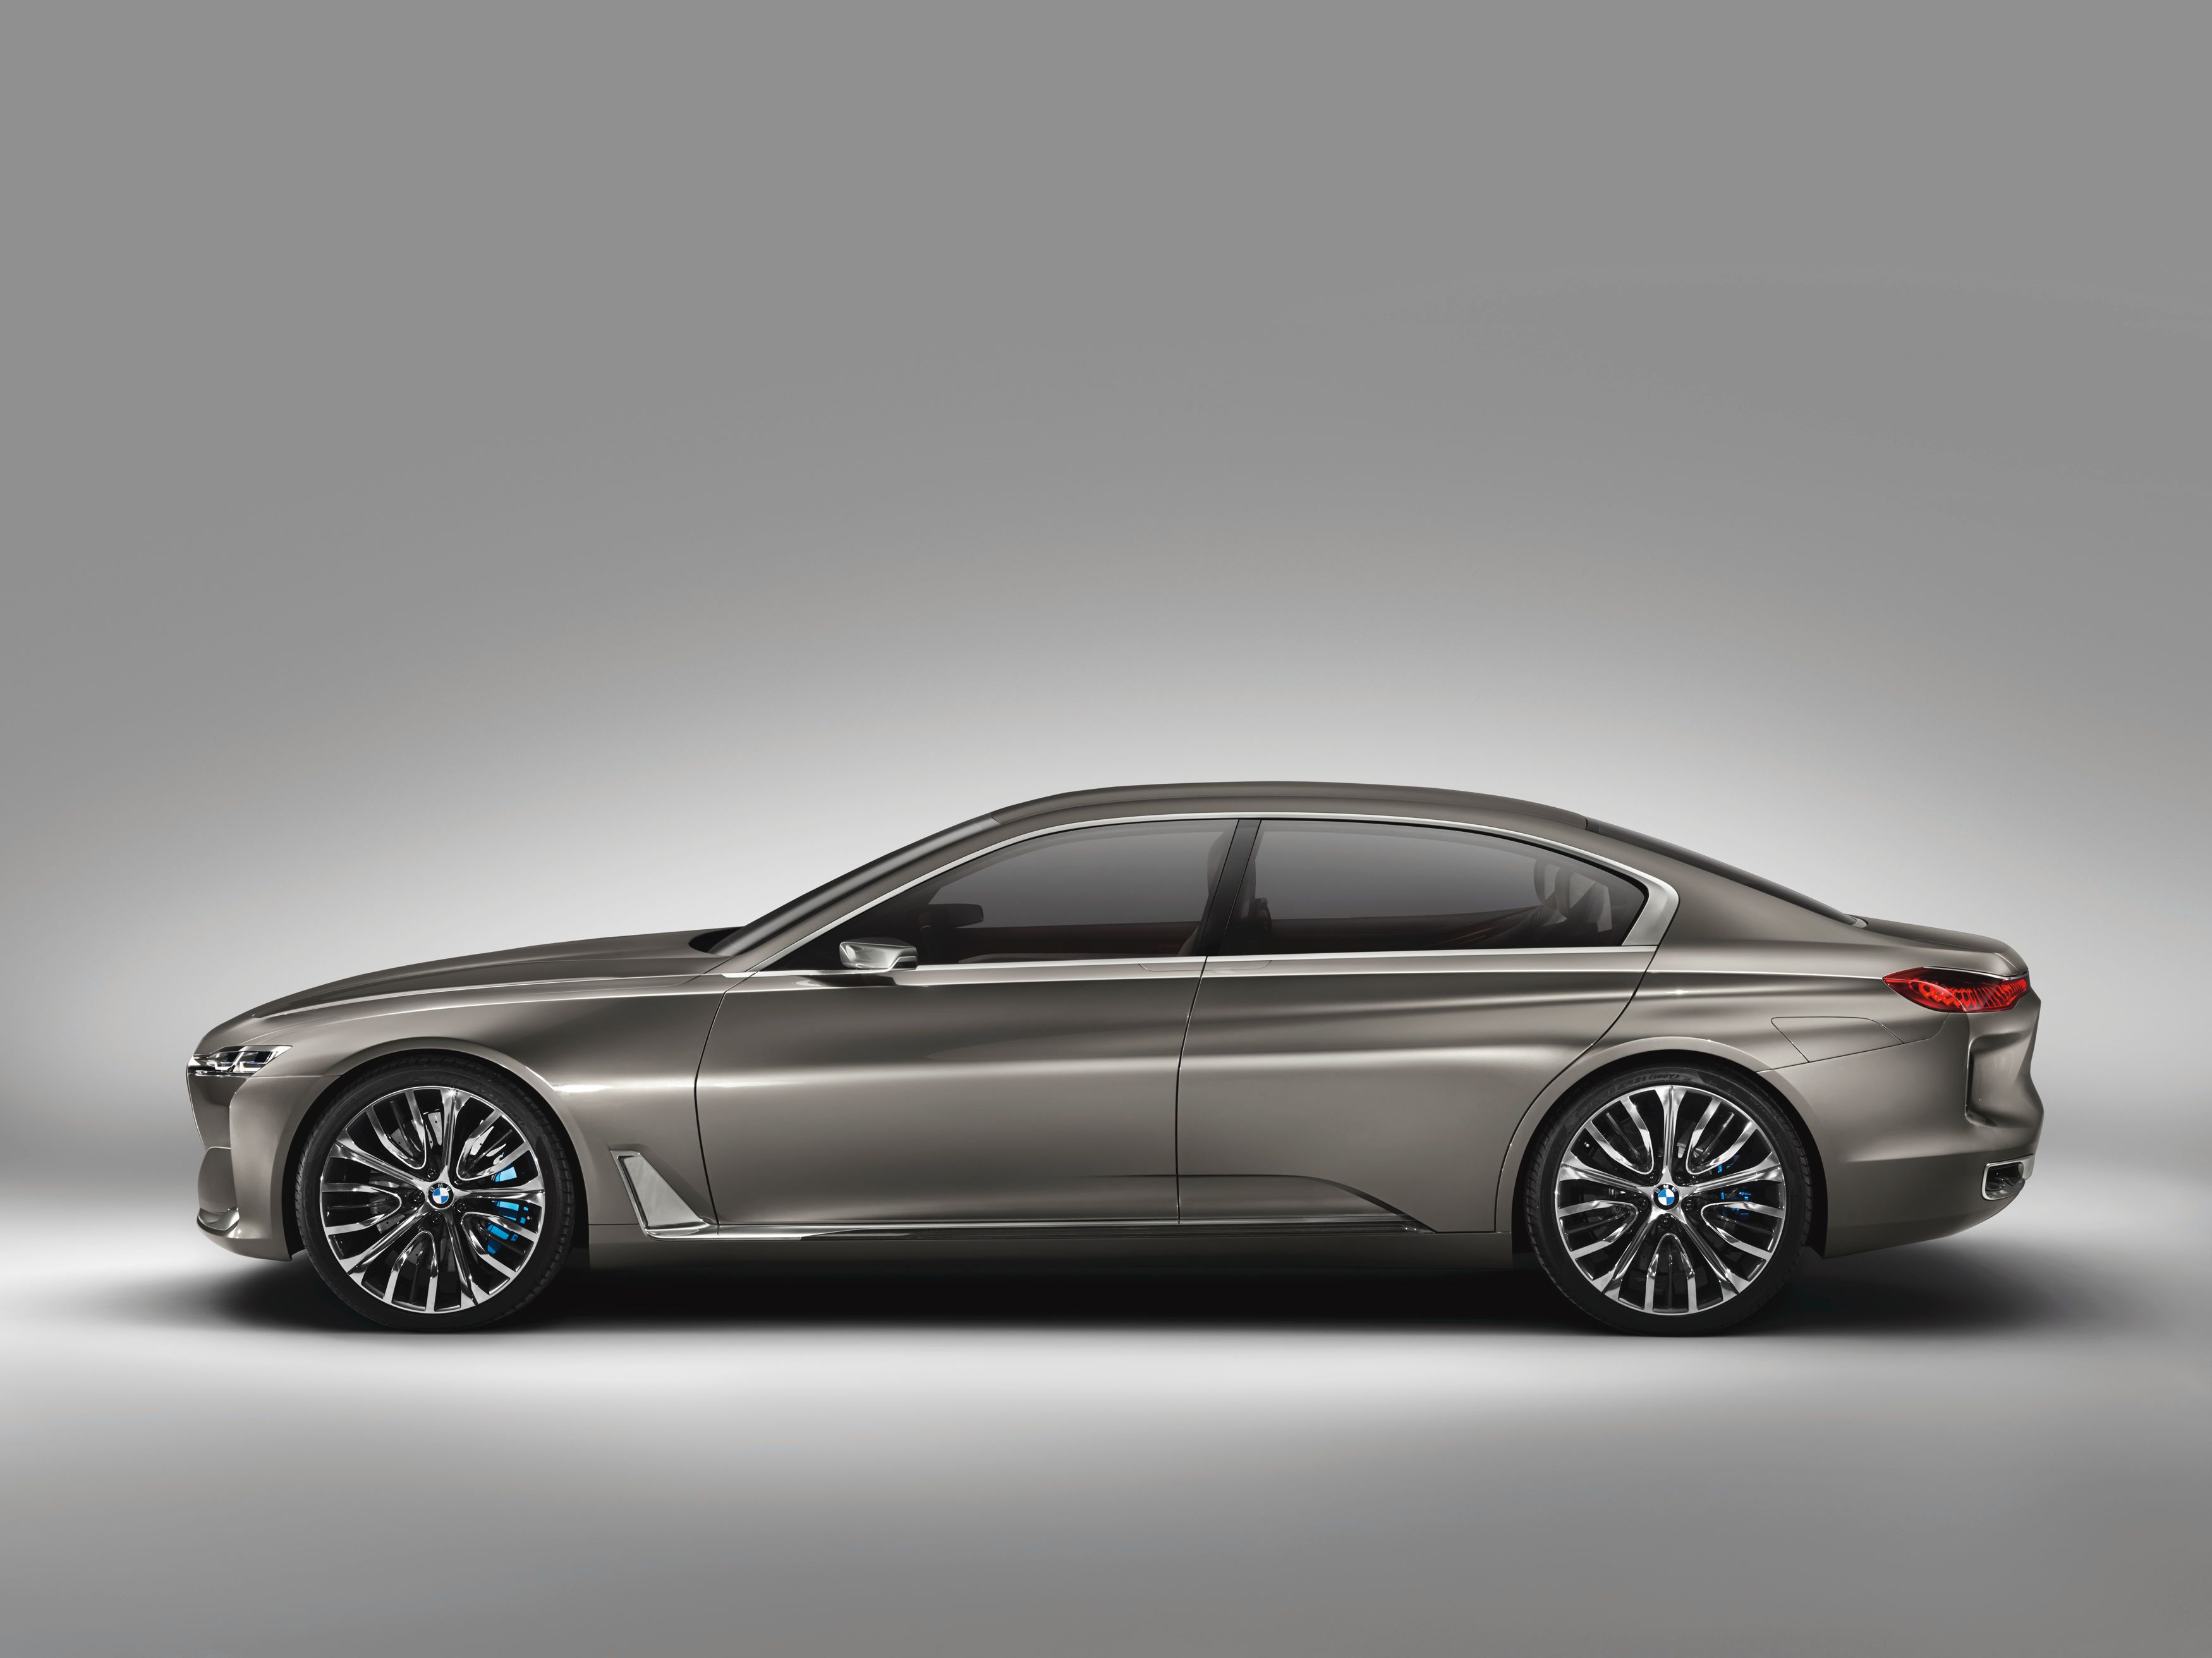 2014 BMW Vision Future Luxury